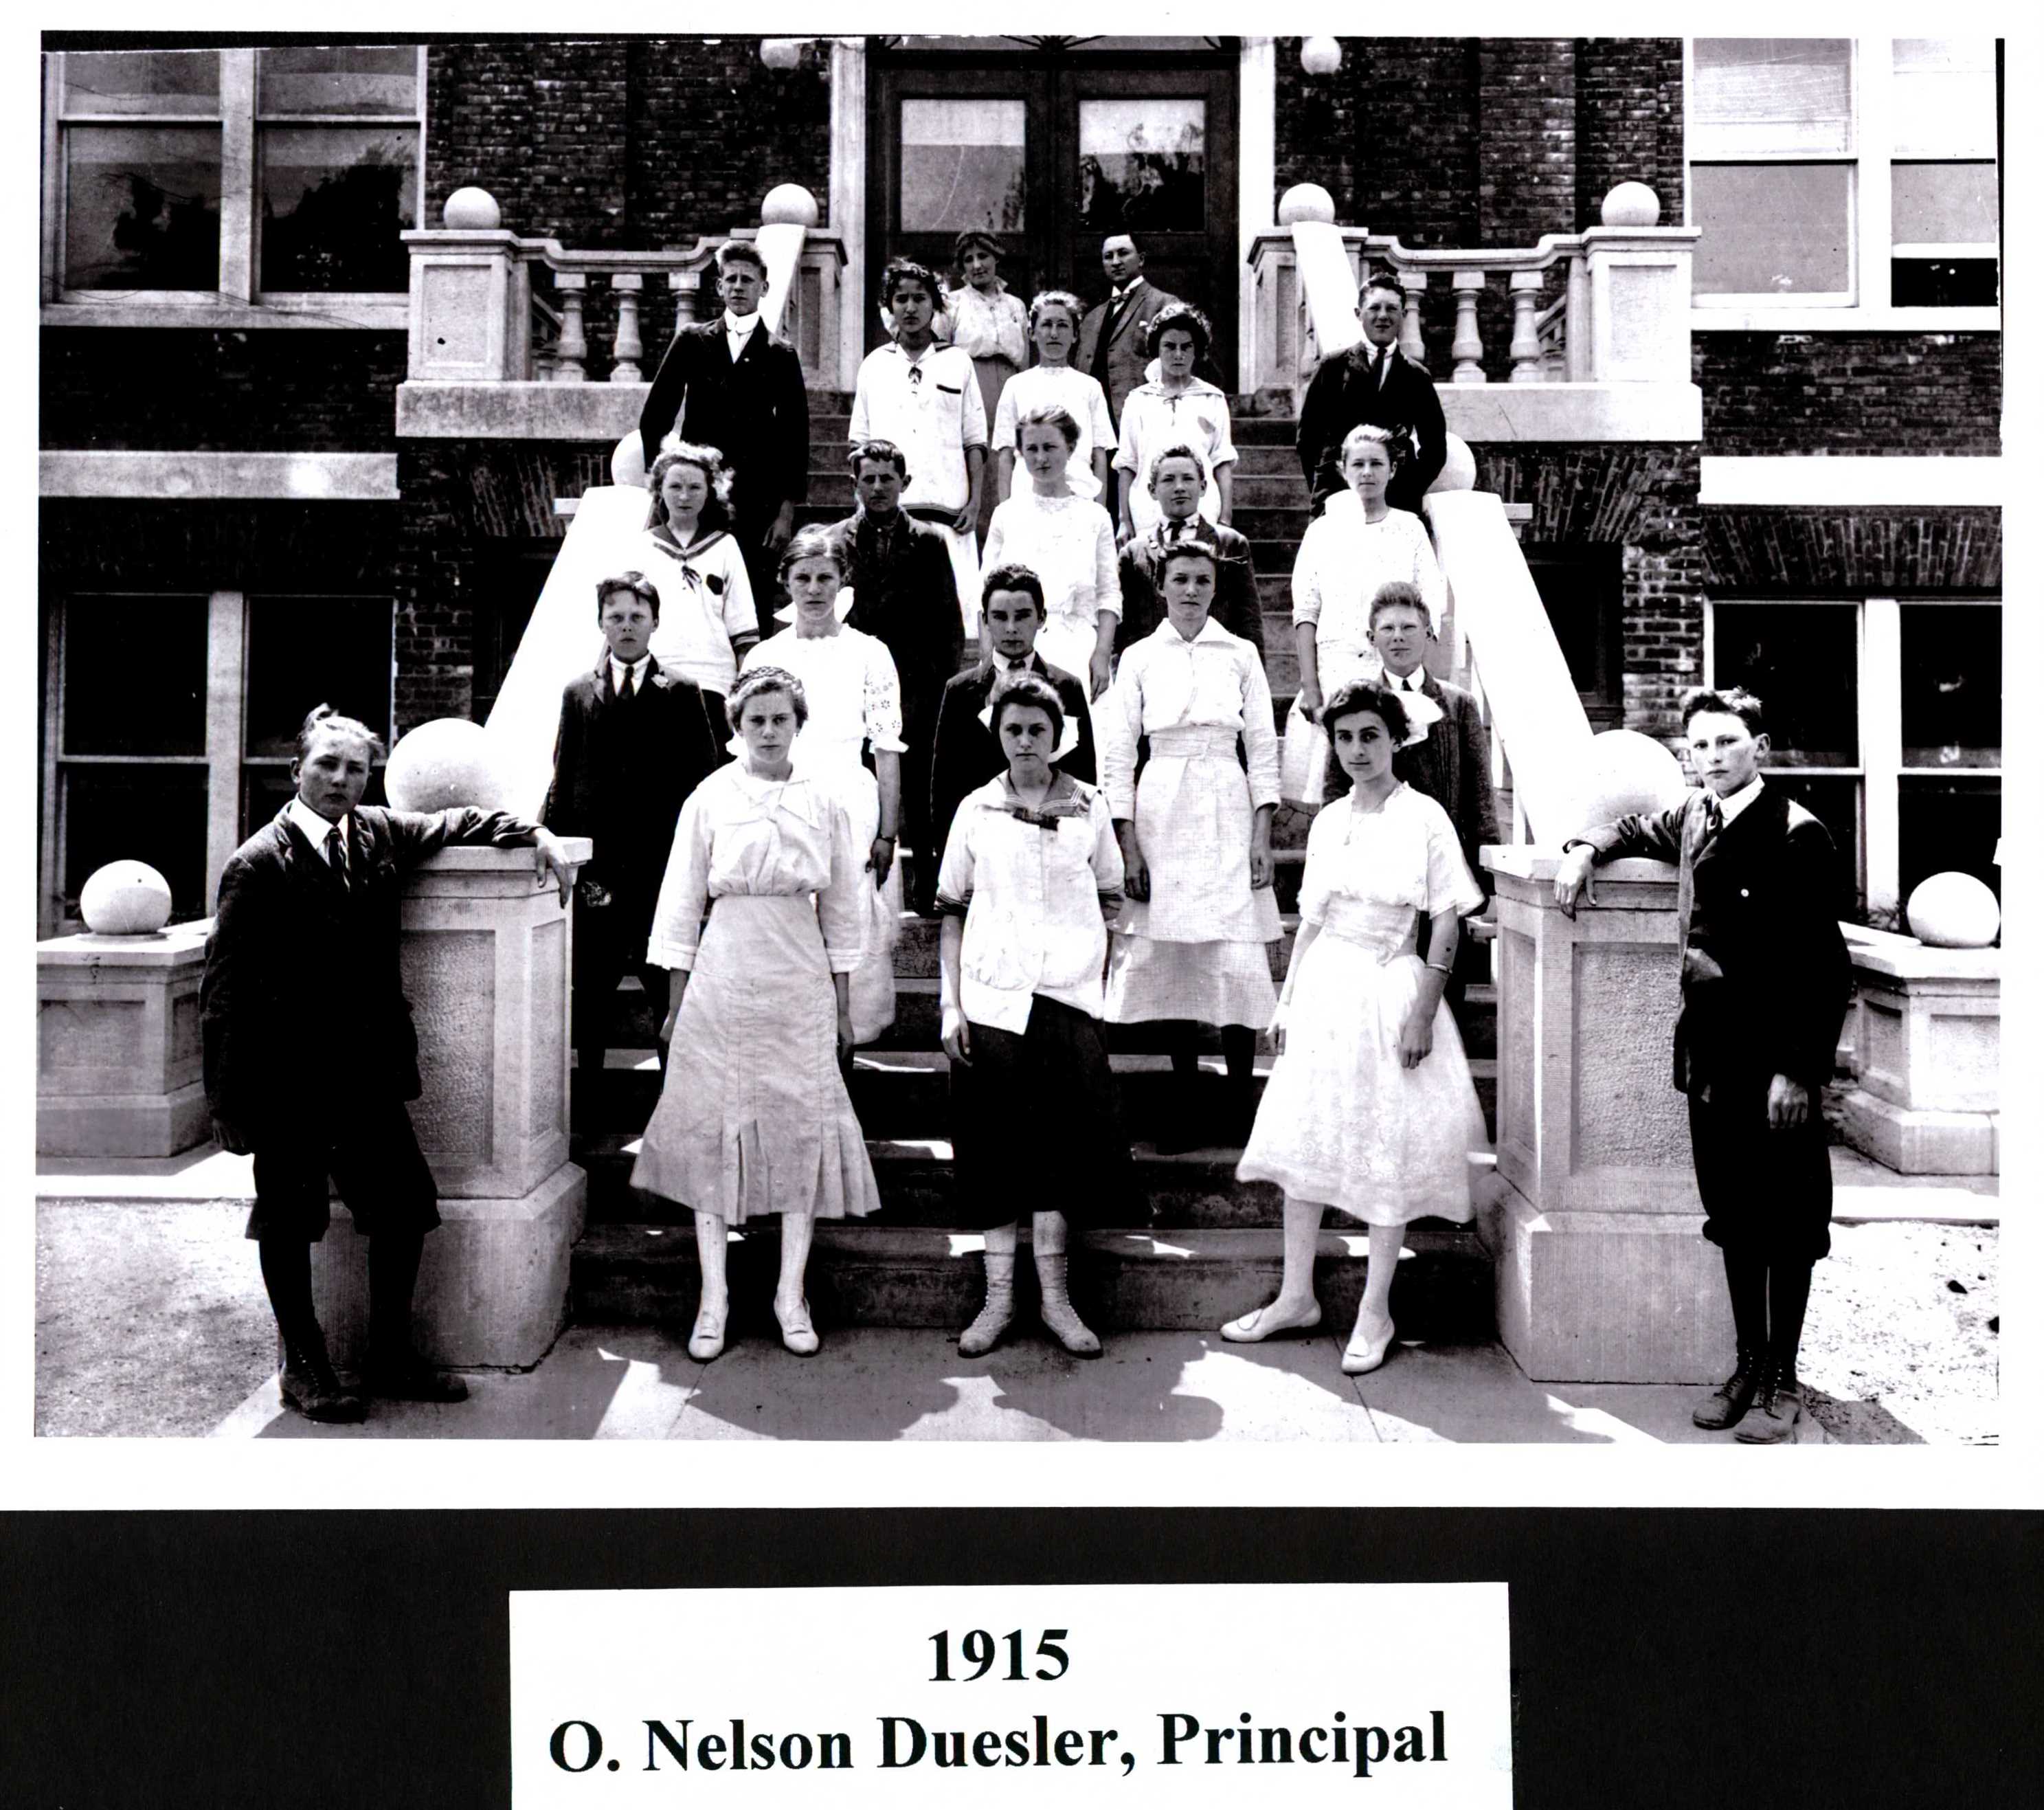 School Street School Class of 1915